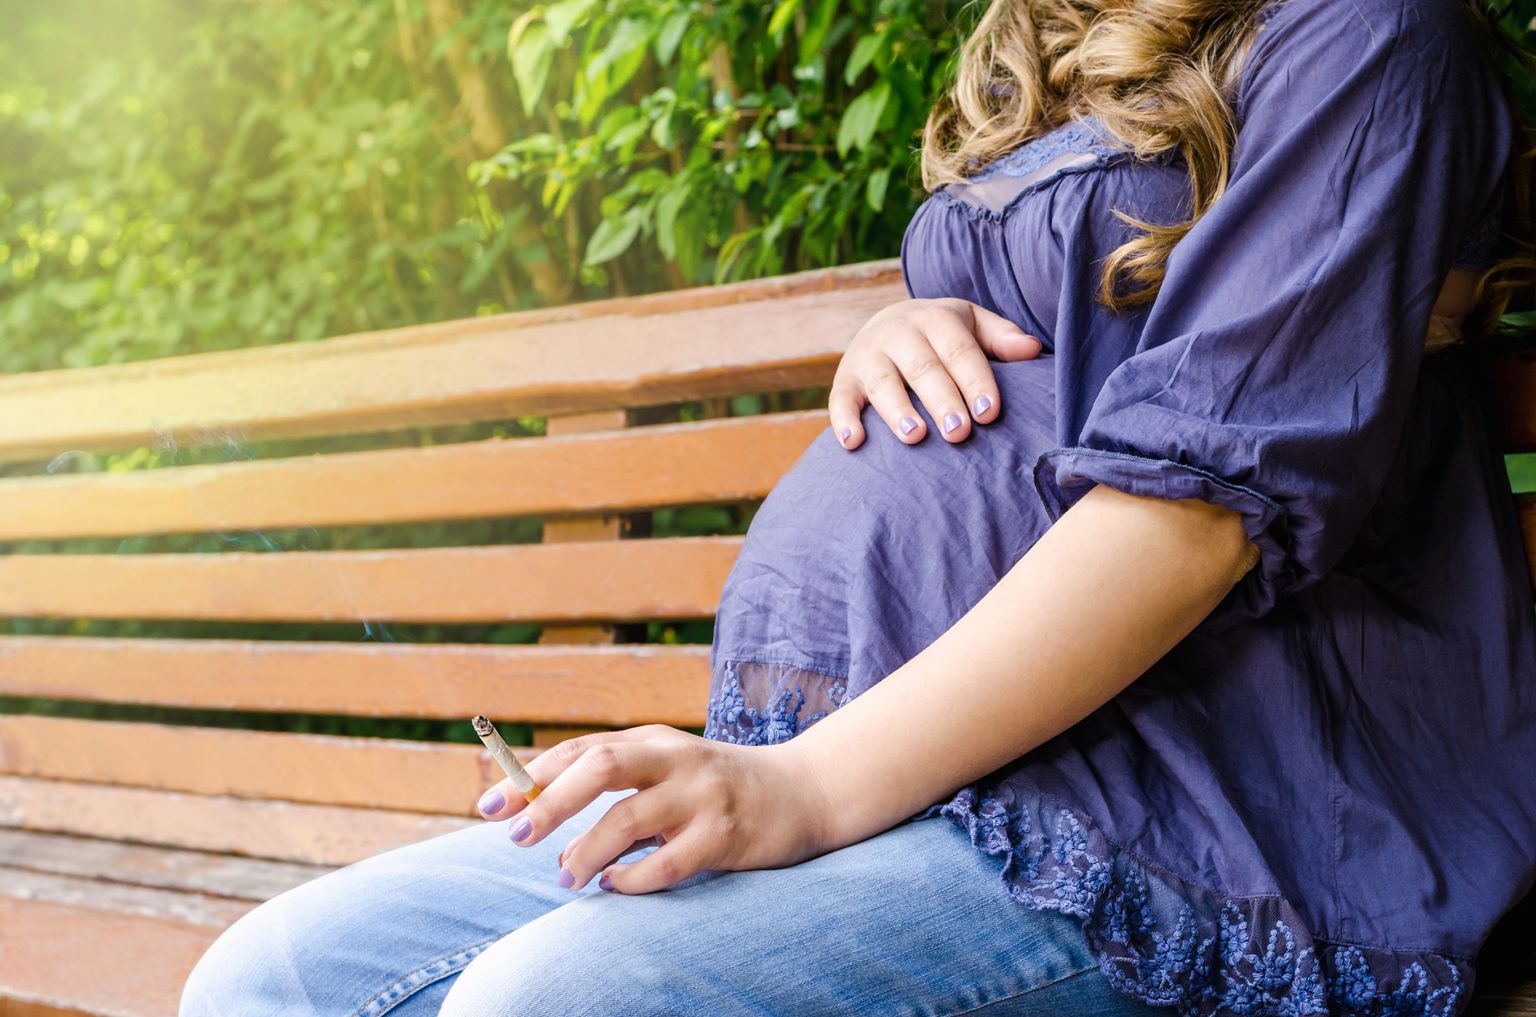 A pregnant woman sits on a park bench smoking a cigarette.